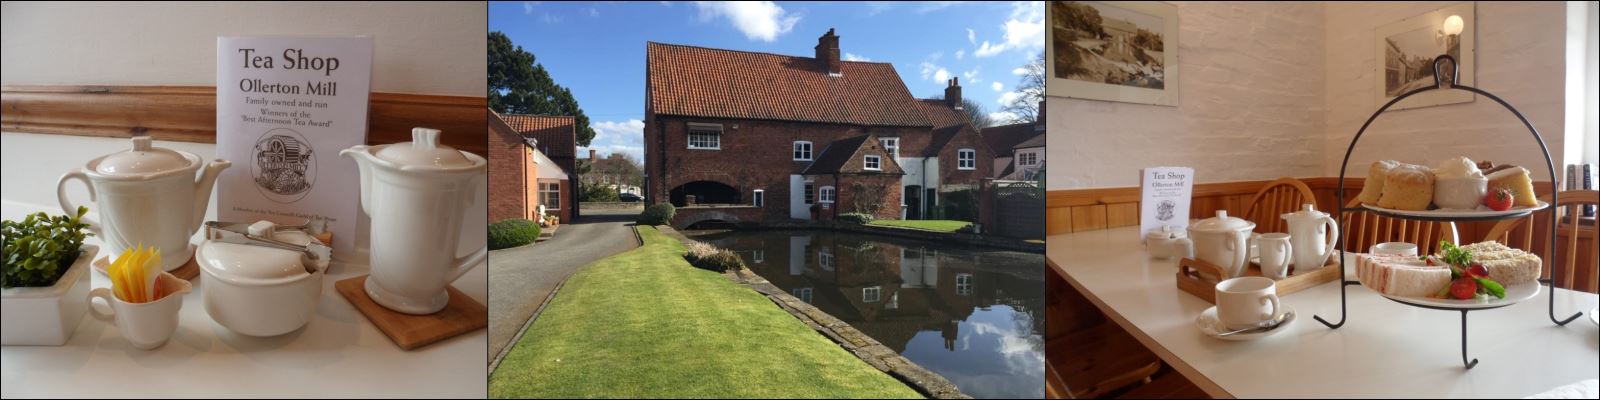 Ollerton Watermill Tea Shop | Visit Nottinghamshire